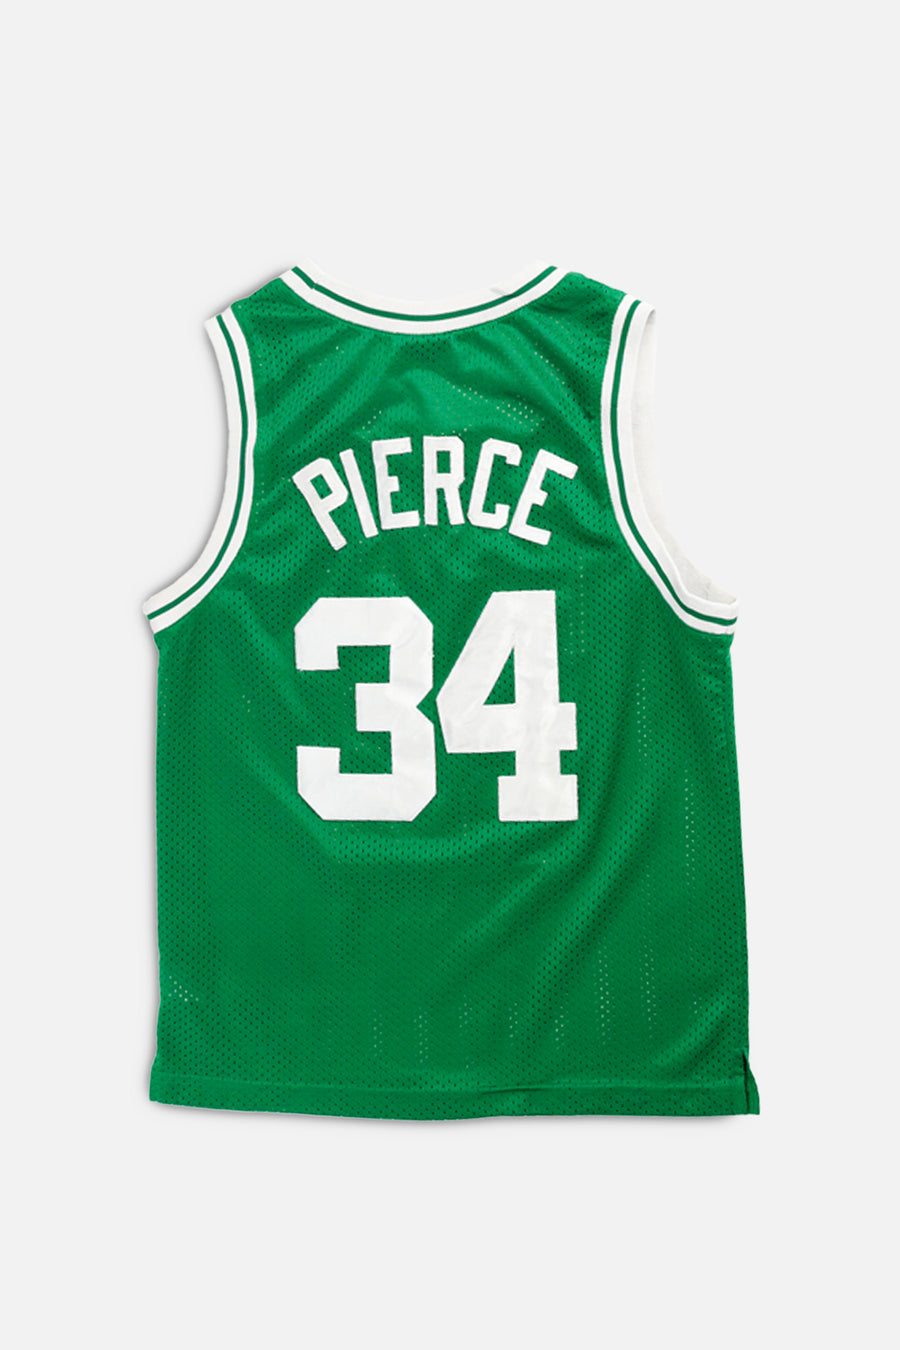 Vintage Boston Celtics NBA Jersey - S